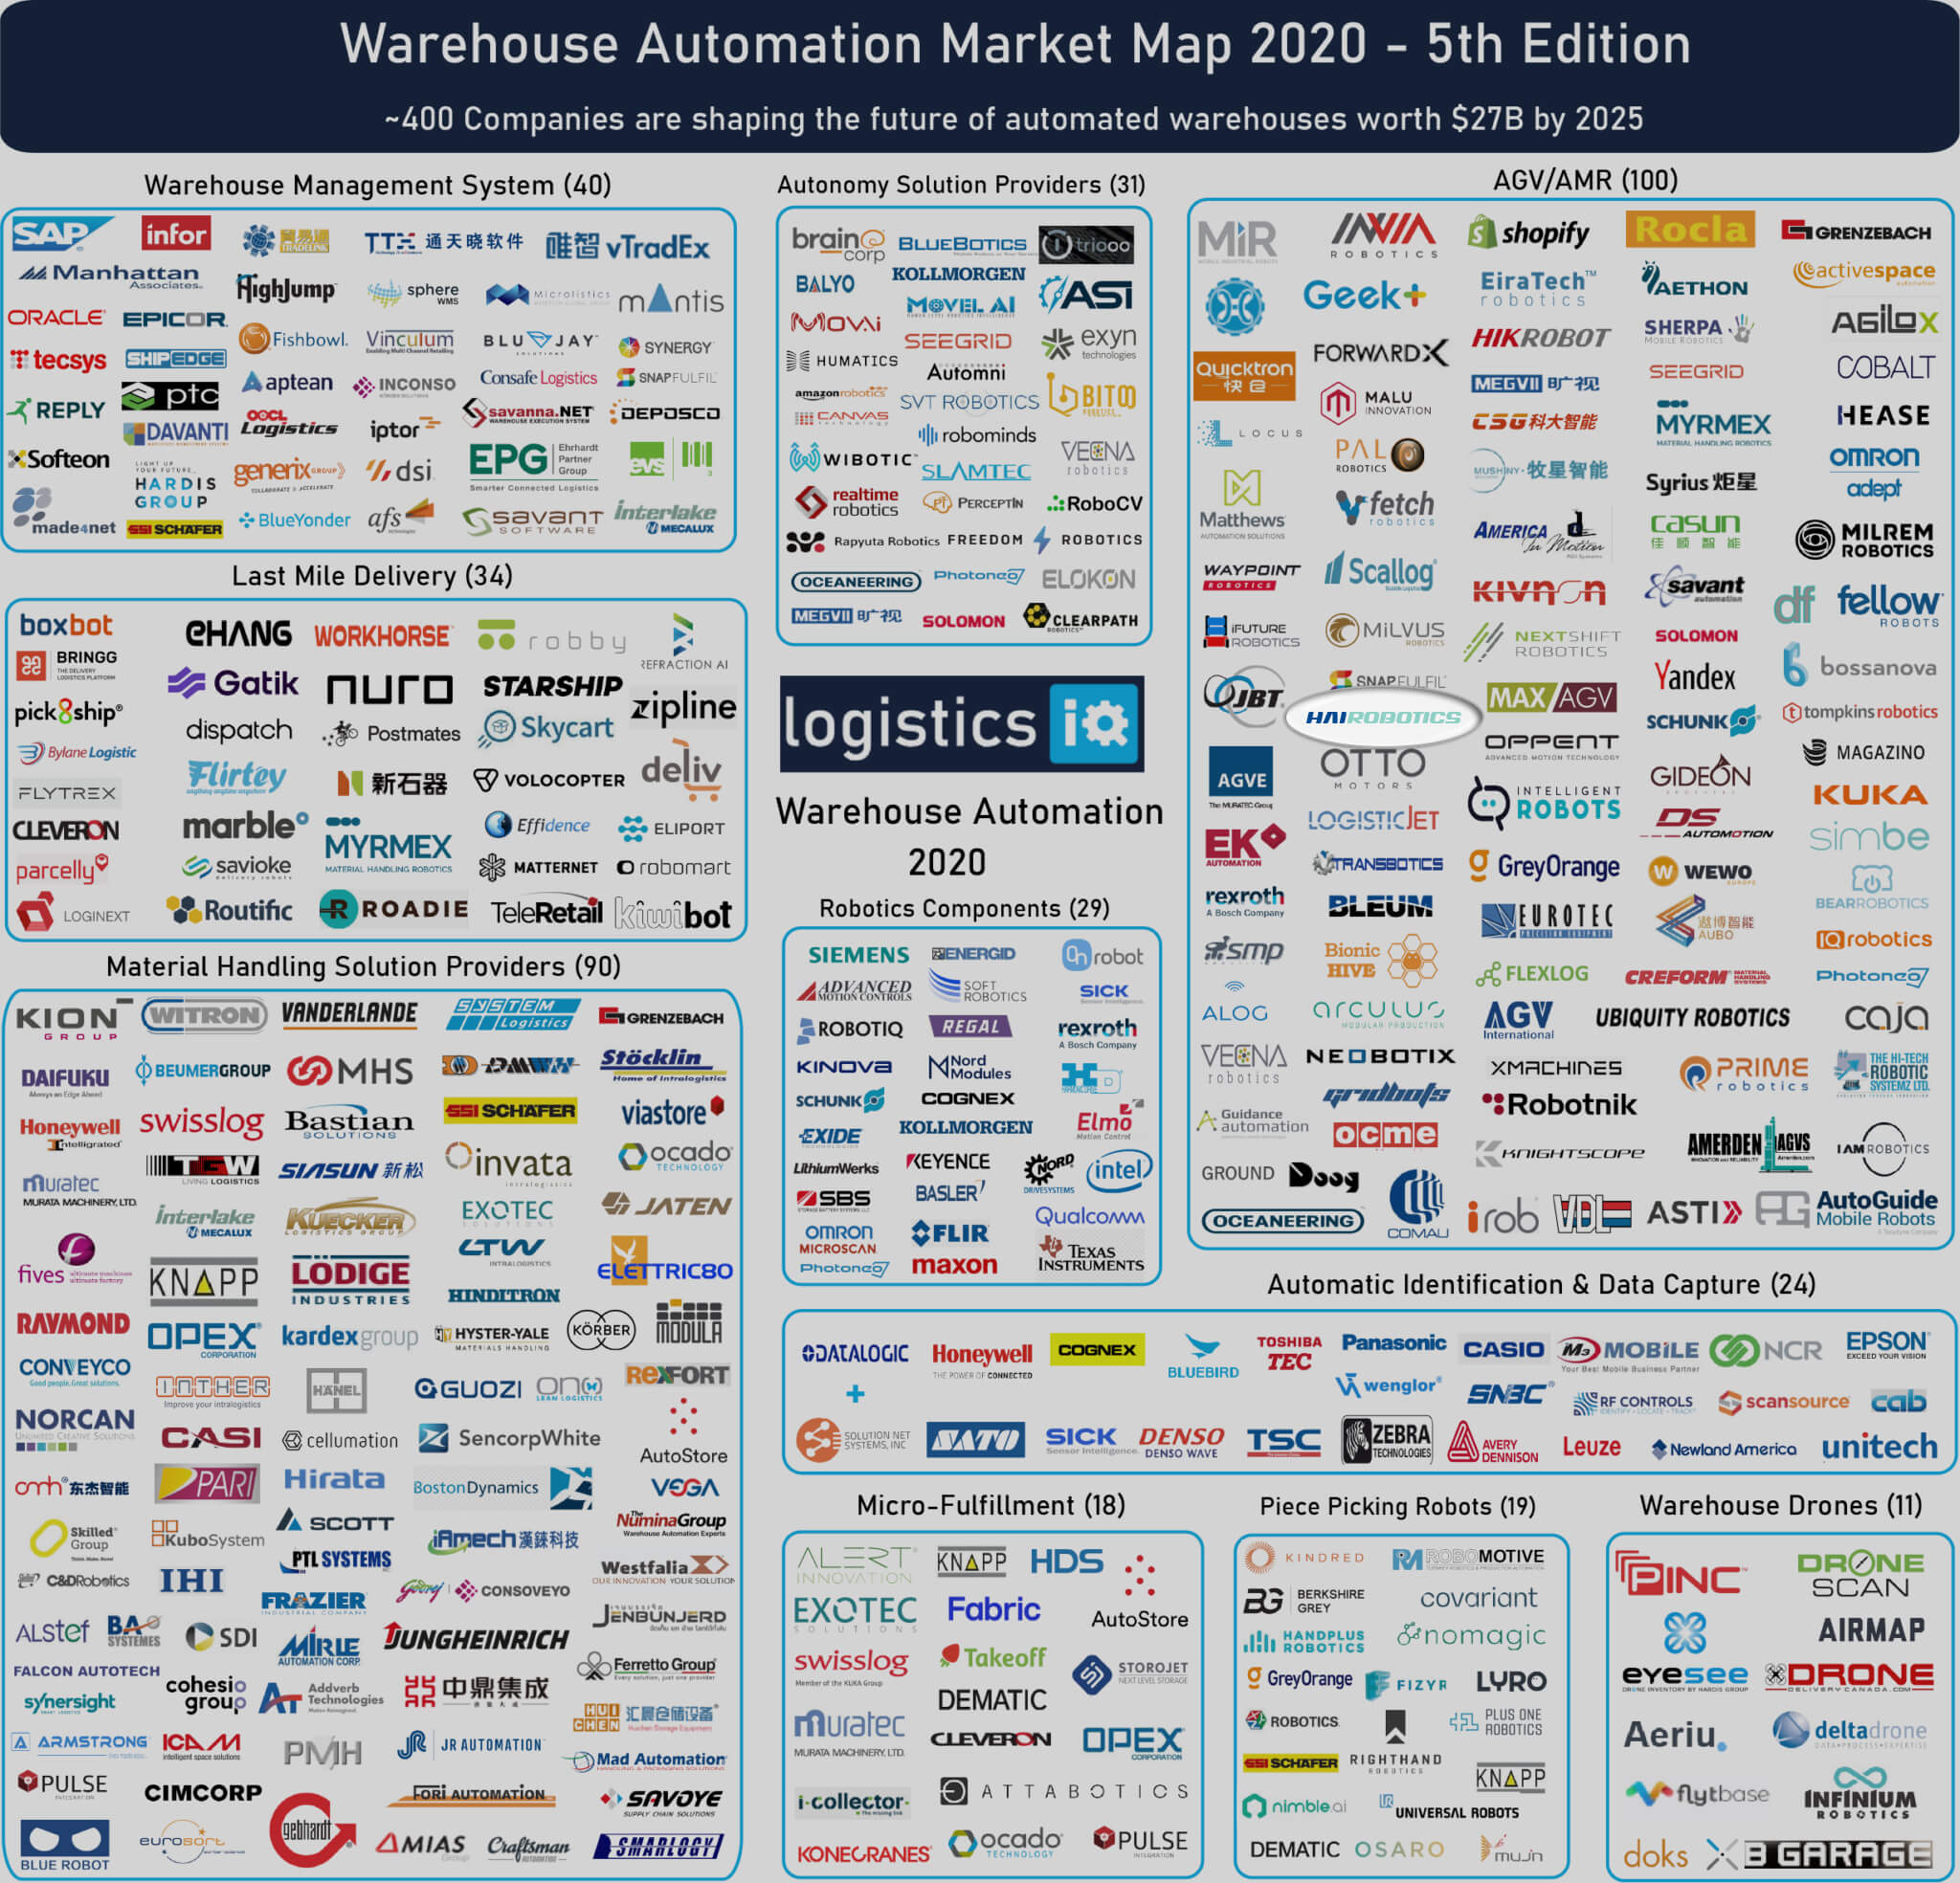 Warehouse Automation Market Map 2020.jpg.jpg